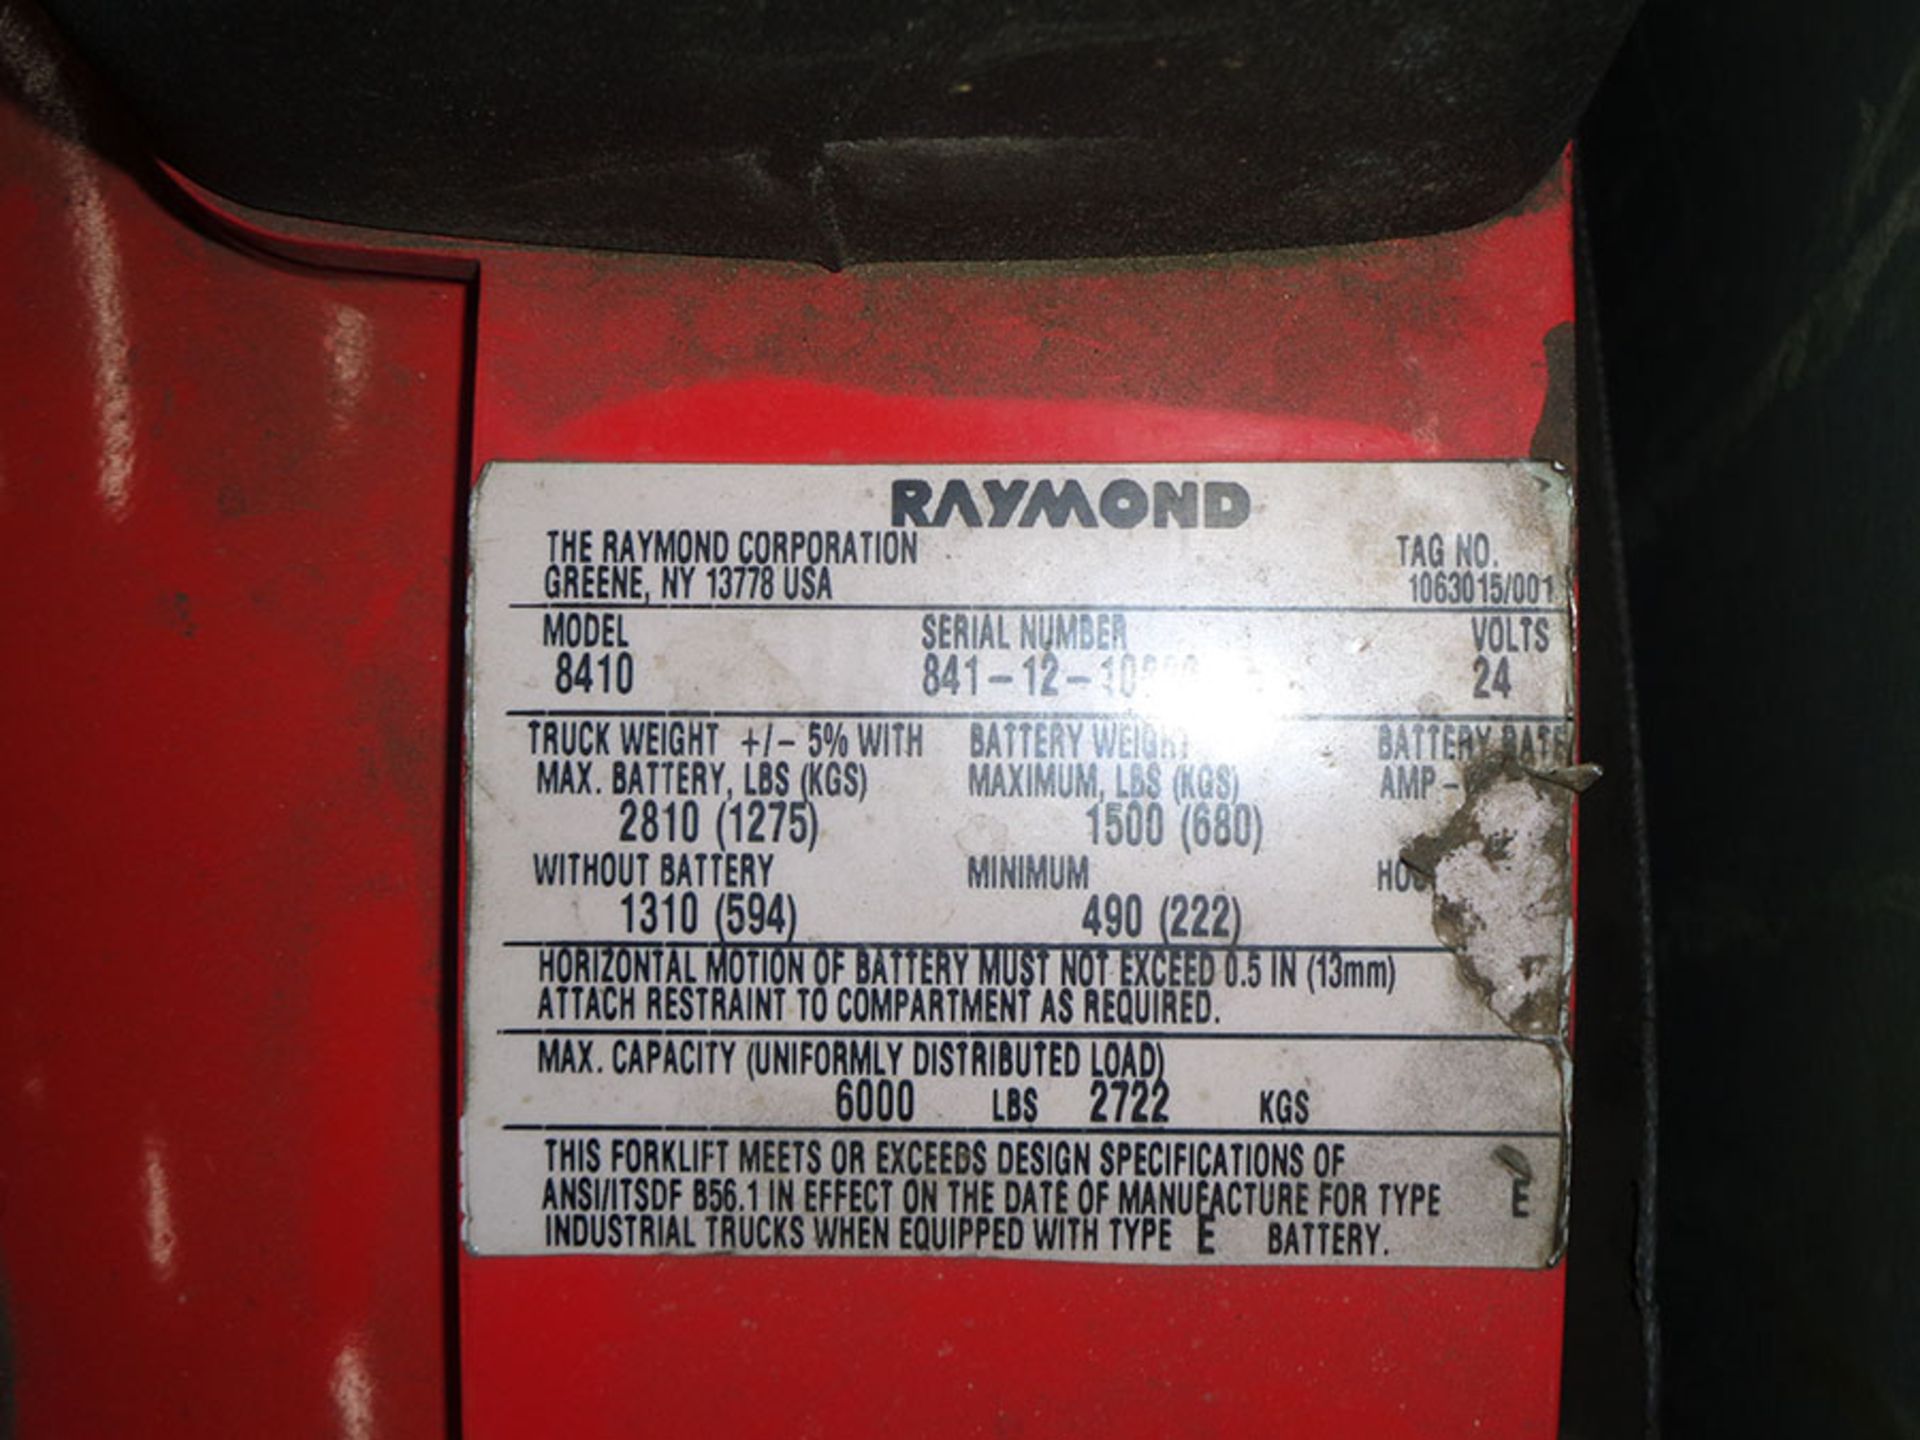 2012 RAYMOND 6,000 LB. ELECTRIC PALLET JACK; 24-VOLT, MODEL 8410 S/N 841-12-10886 - Image 2 of 2